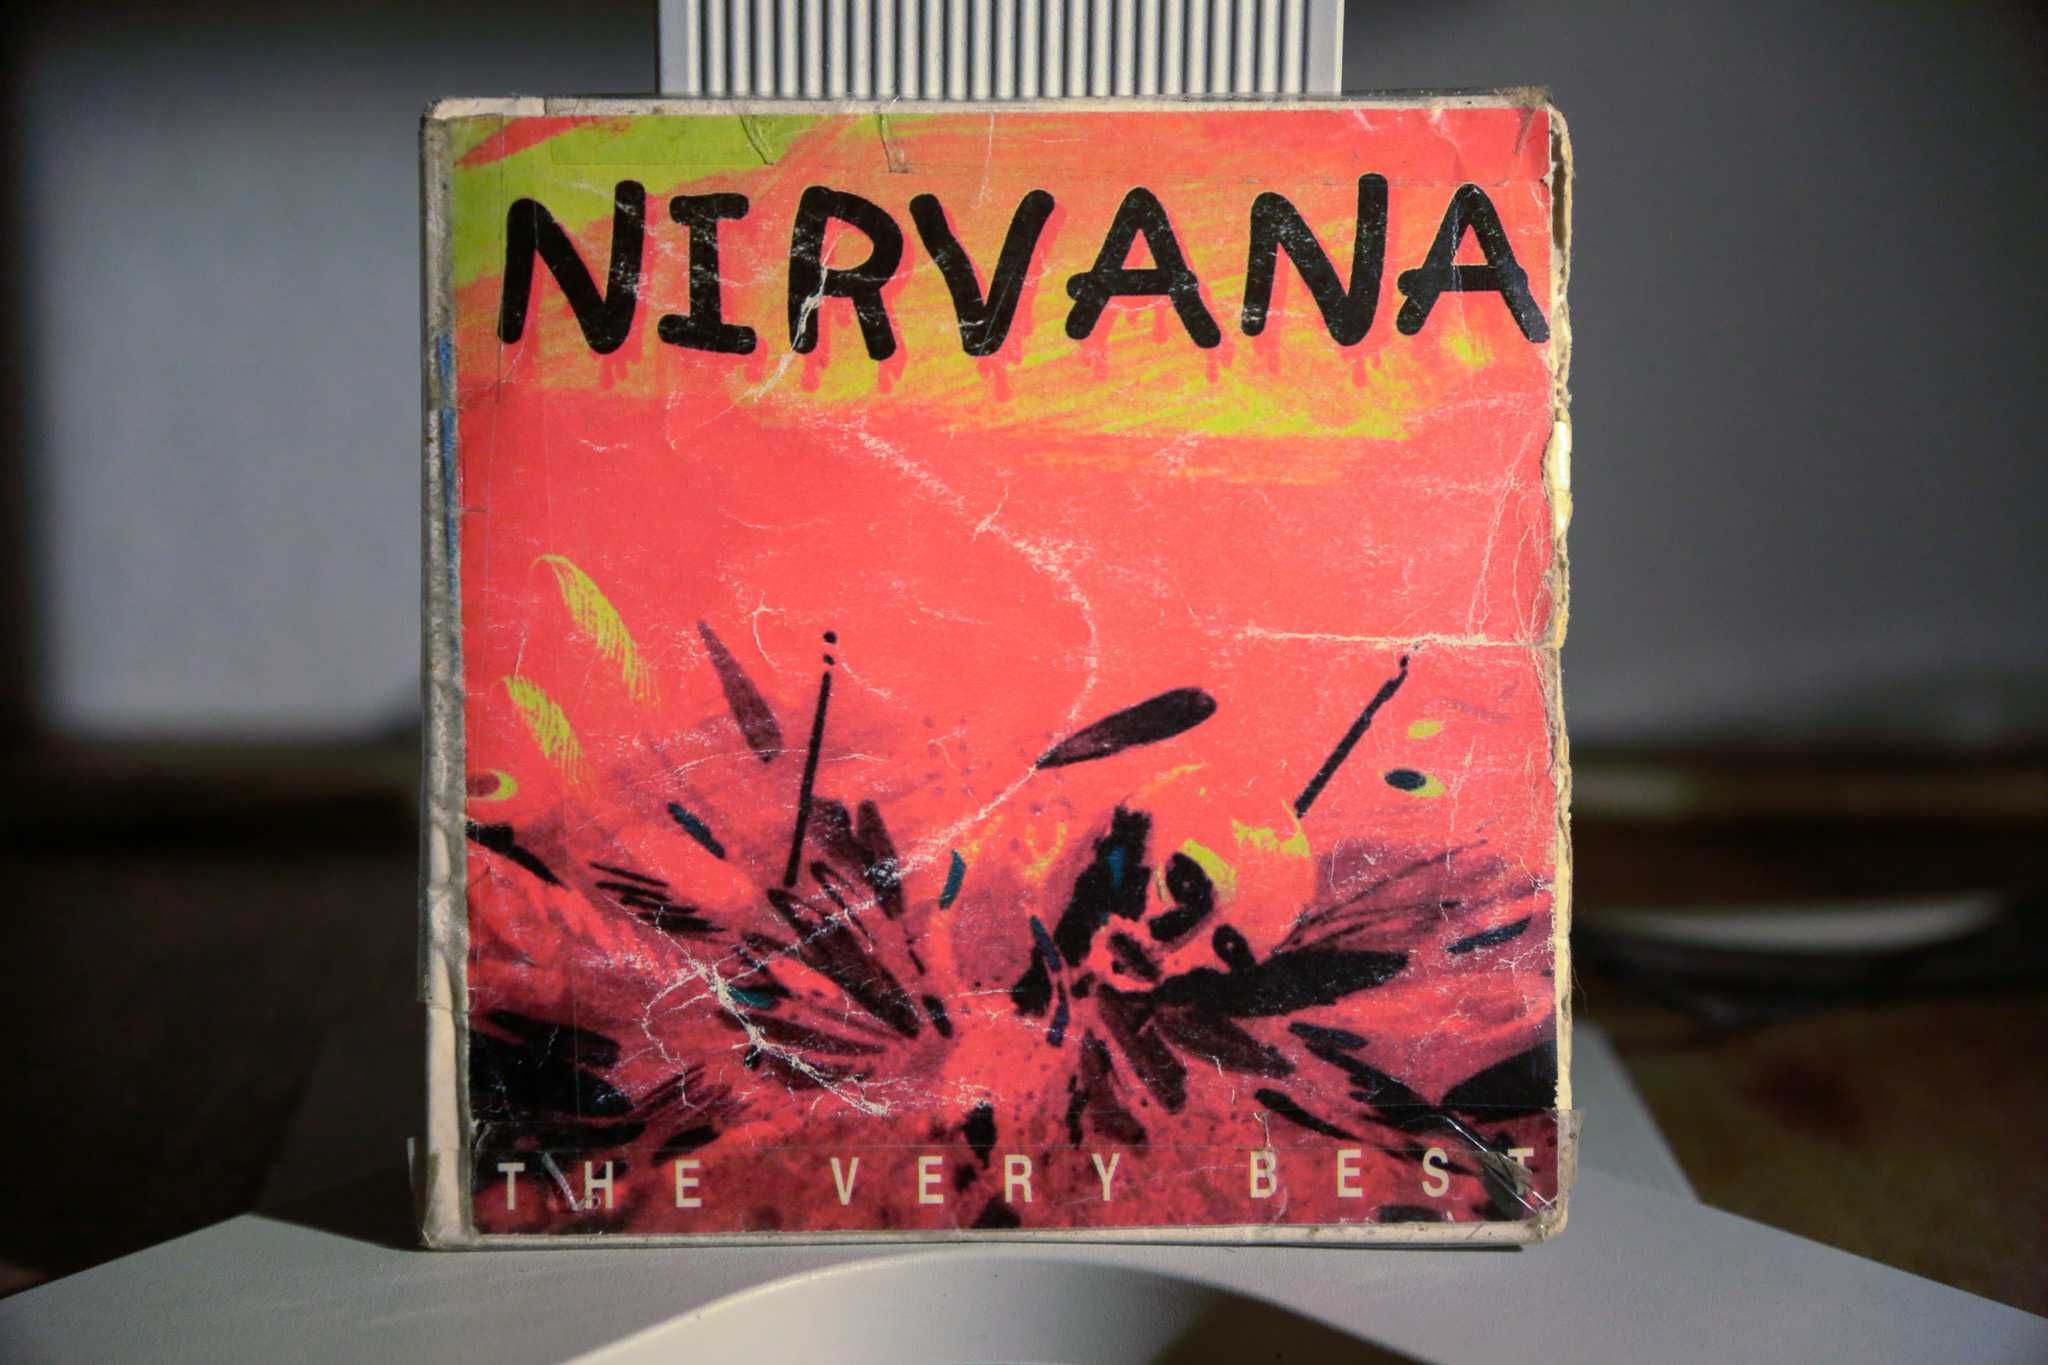 CD NIRVANA - The Very Best